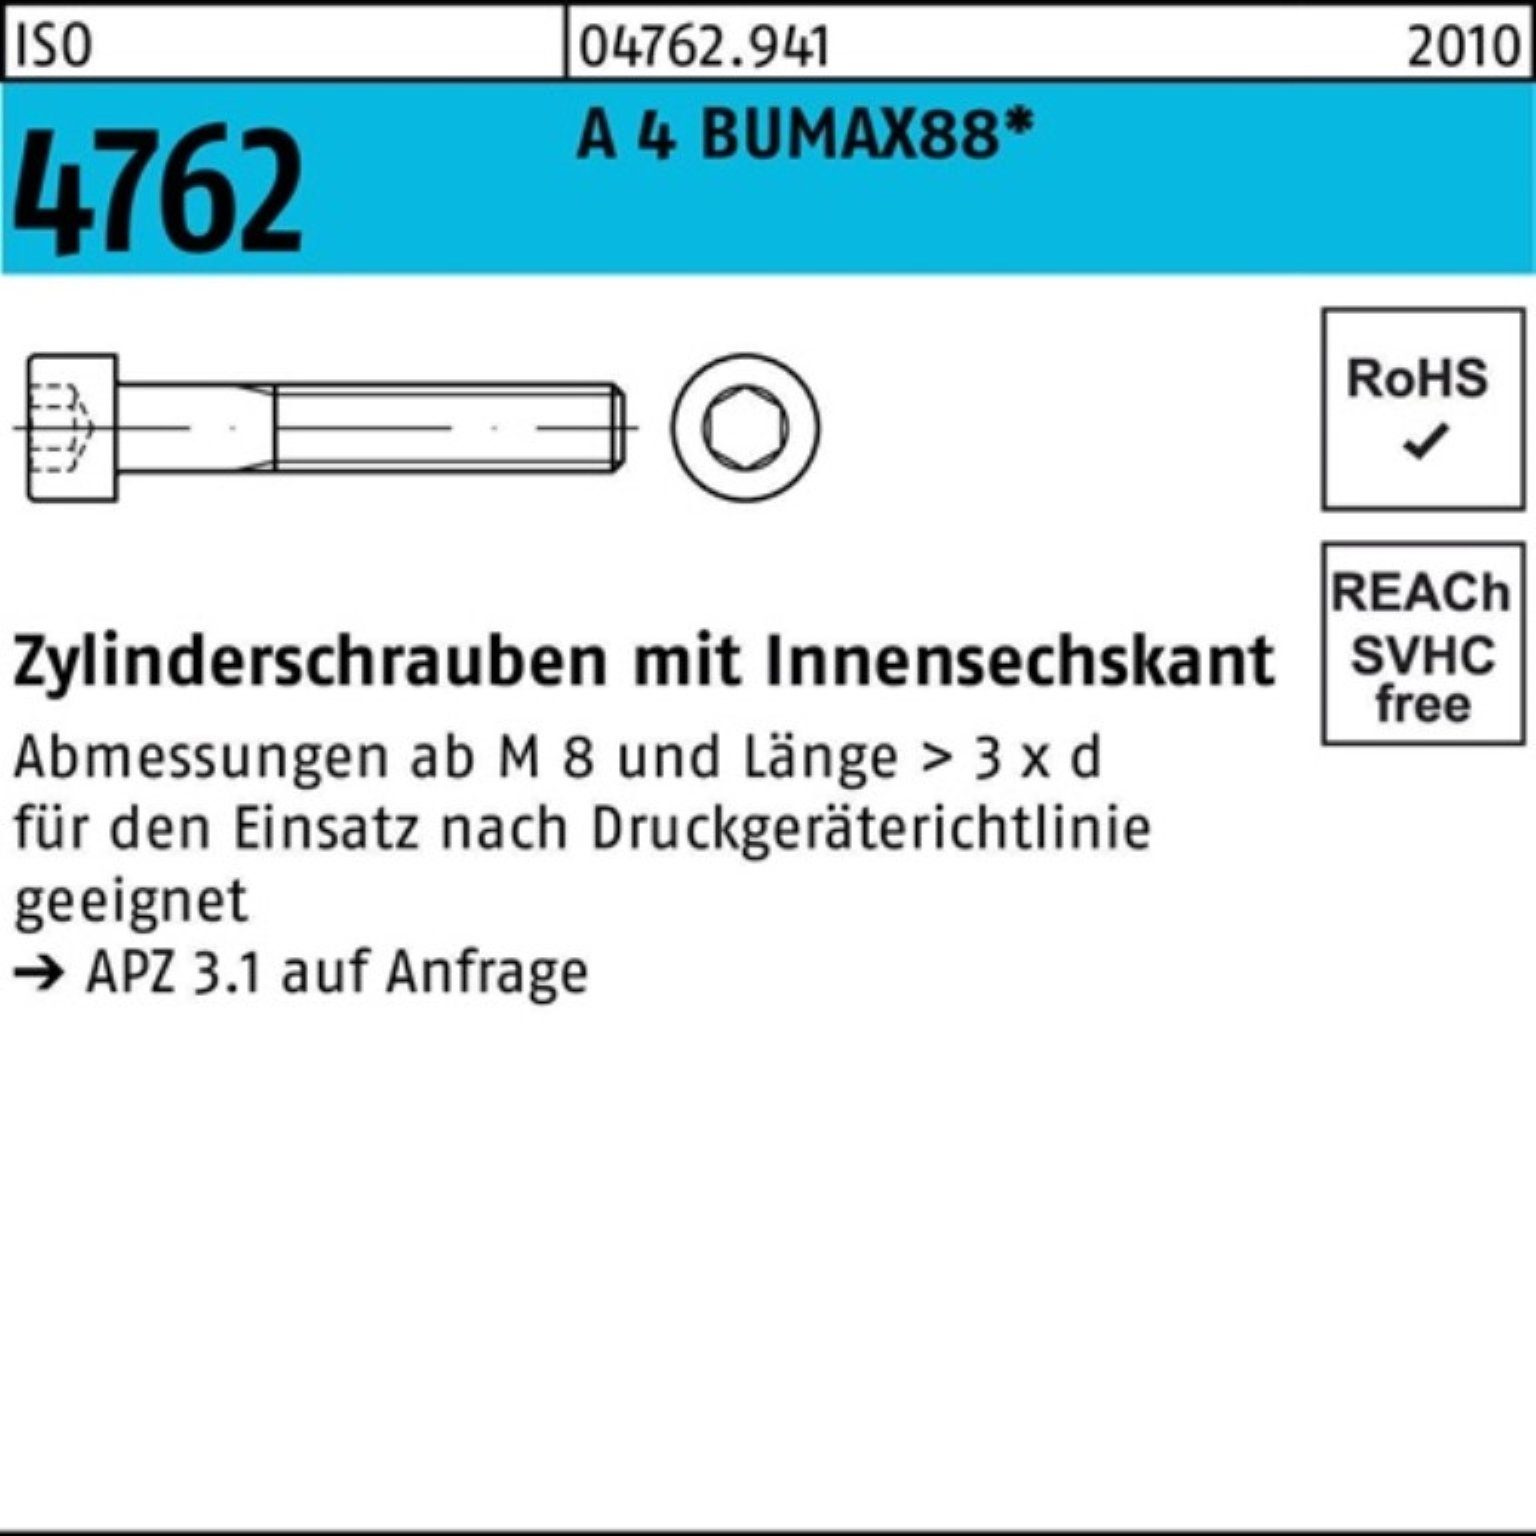 Bufab Zylinderschraube 200er Pack Zylinderschraube 4 12 4762 M4x A BUMAX88 200 ISO Innen-6kt